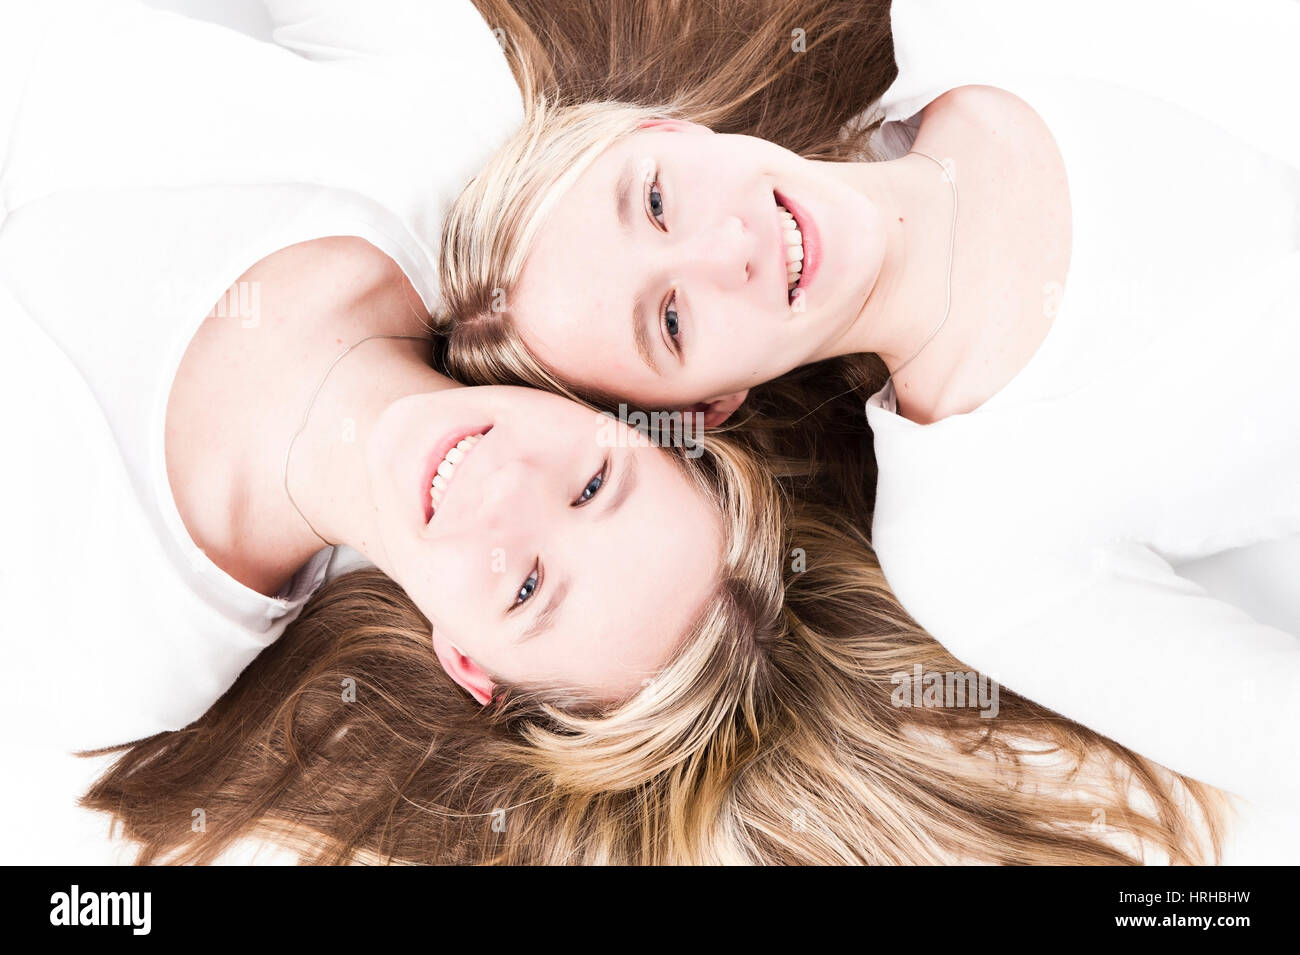 Model released, Zwillinge - twins Stock Photo